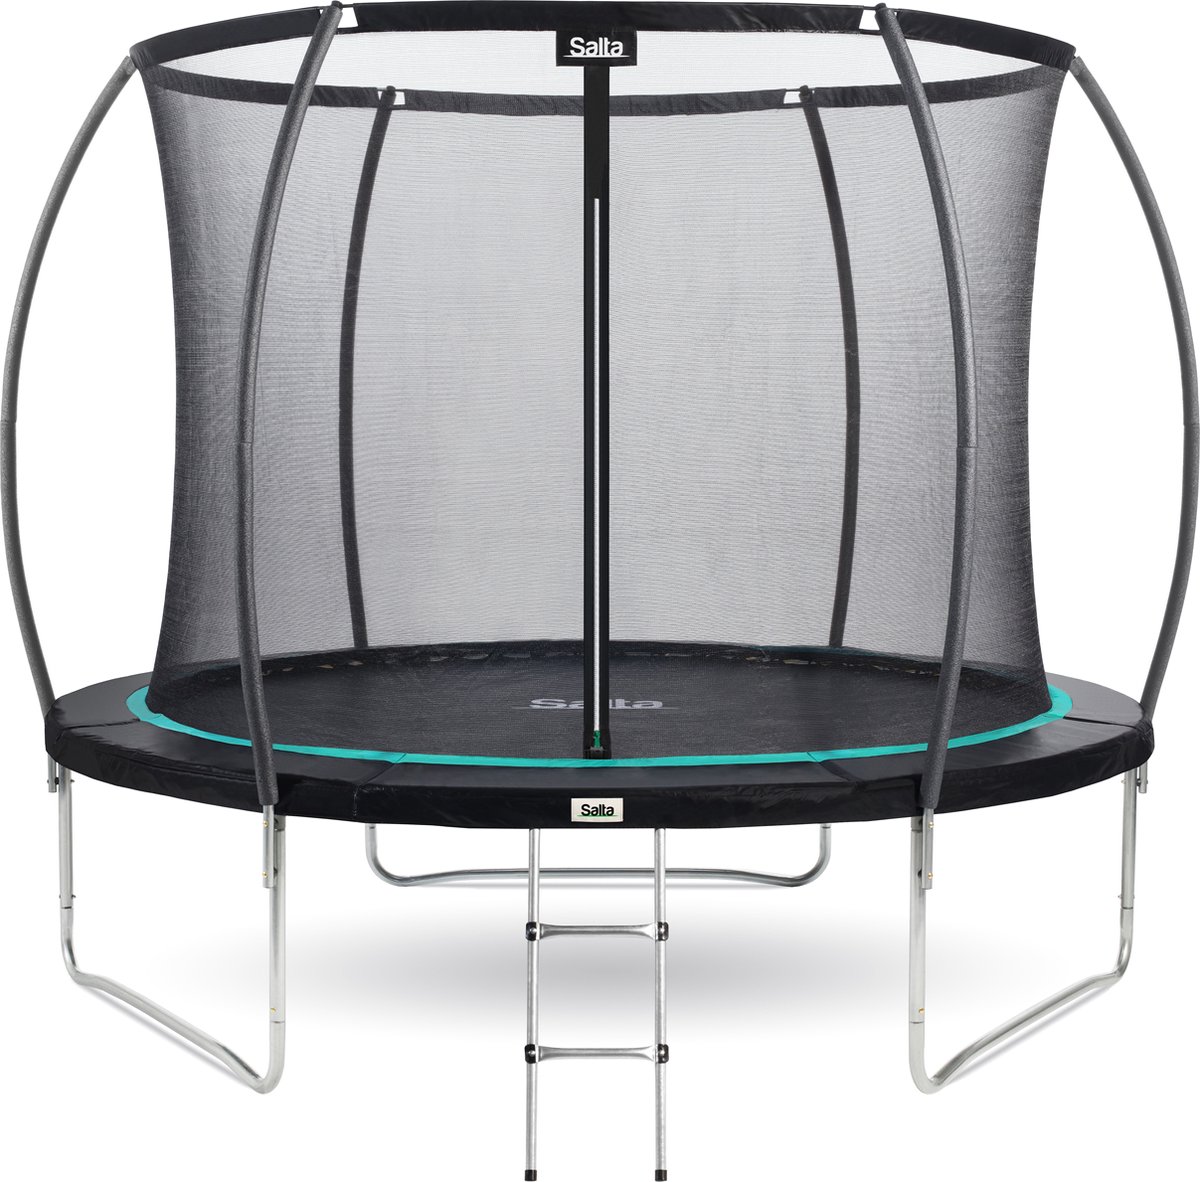 Salta Cosmos - Trampoline met veiligheidsnet en ladder - ø 305 cm - Zwart